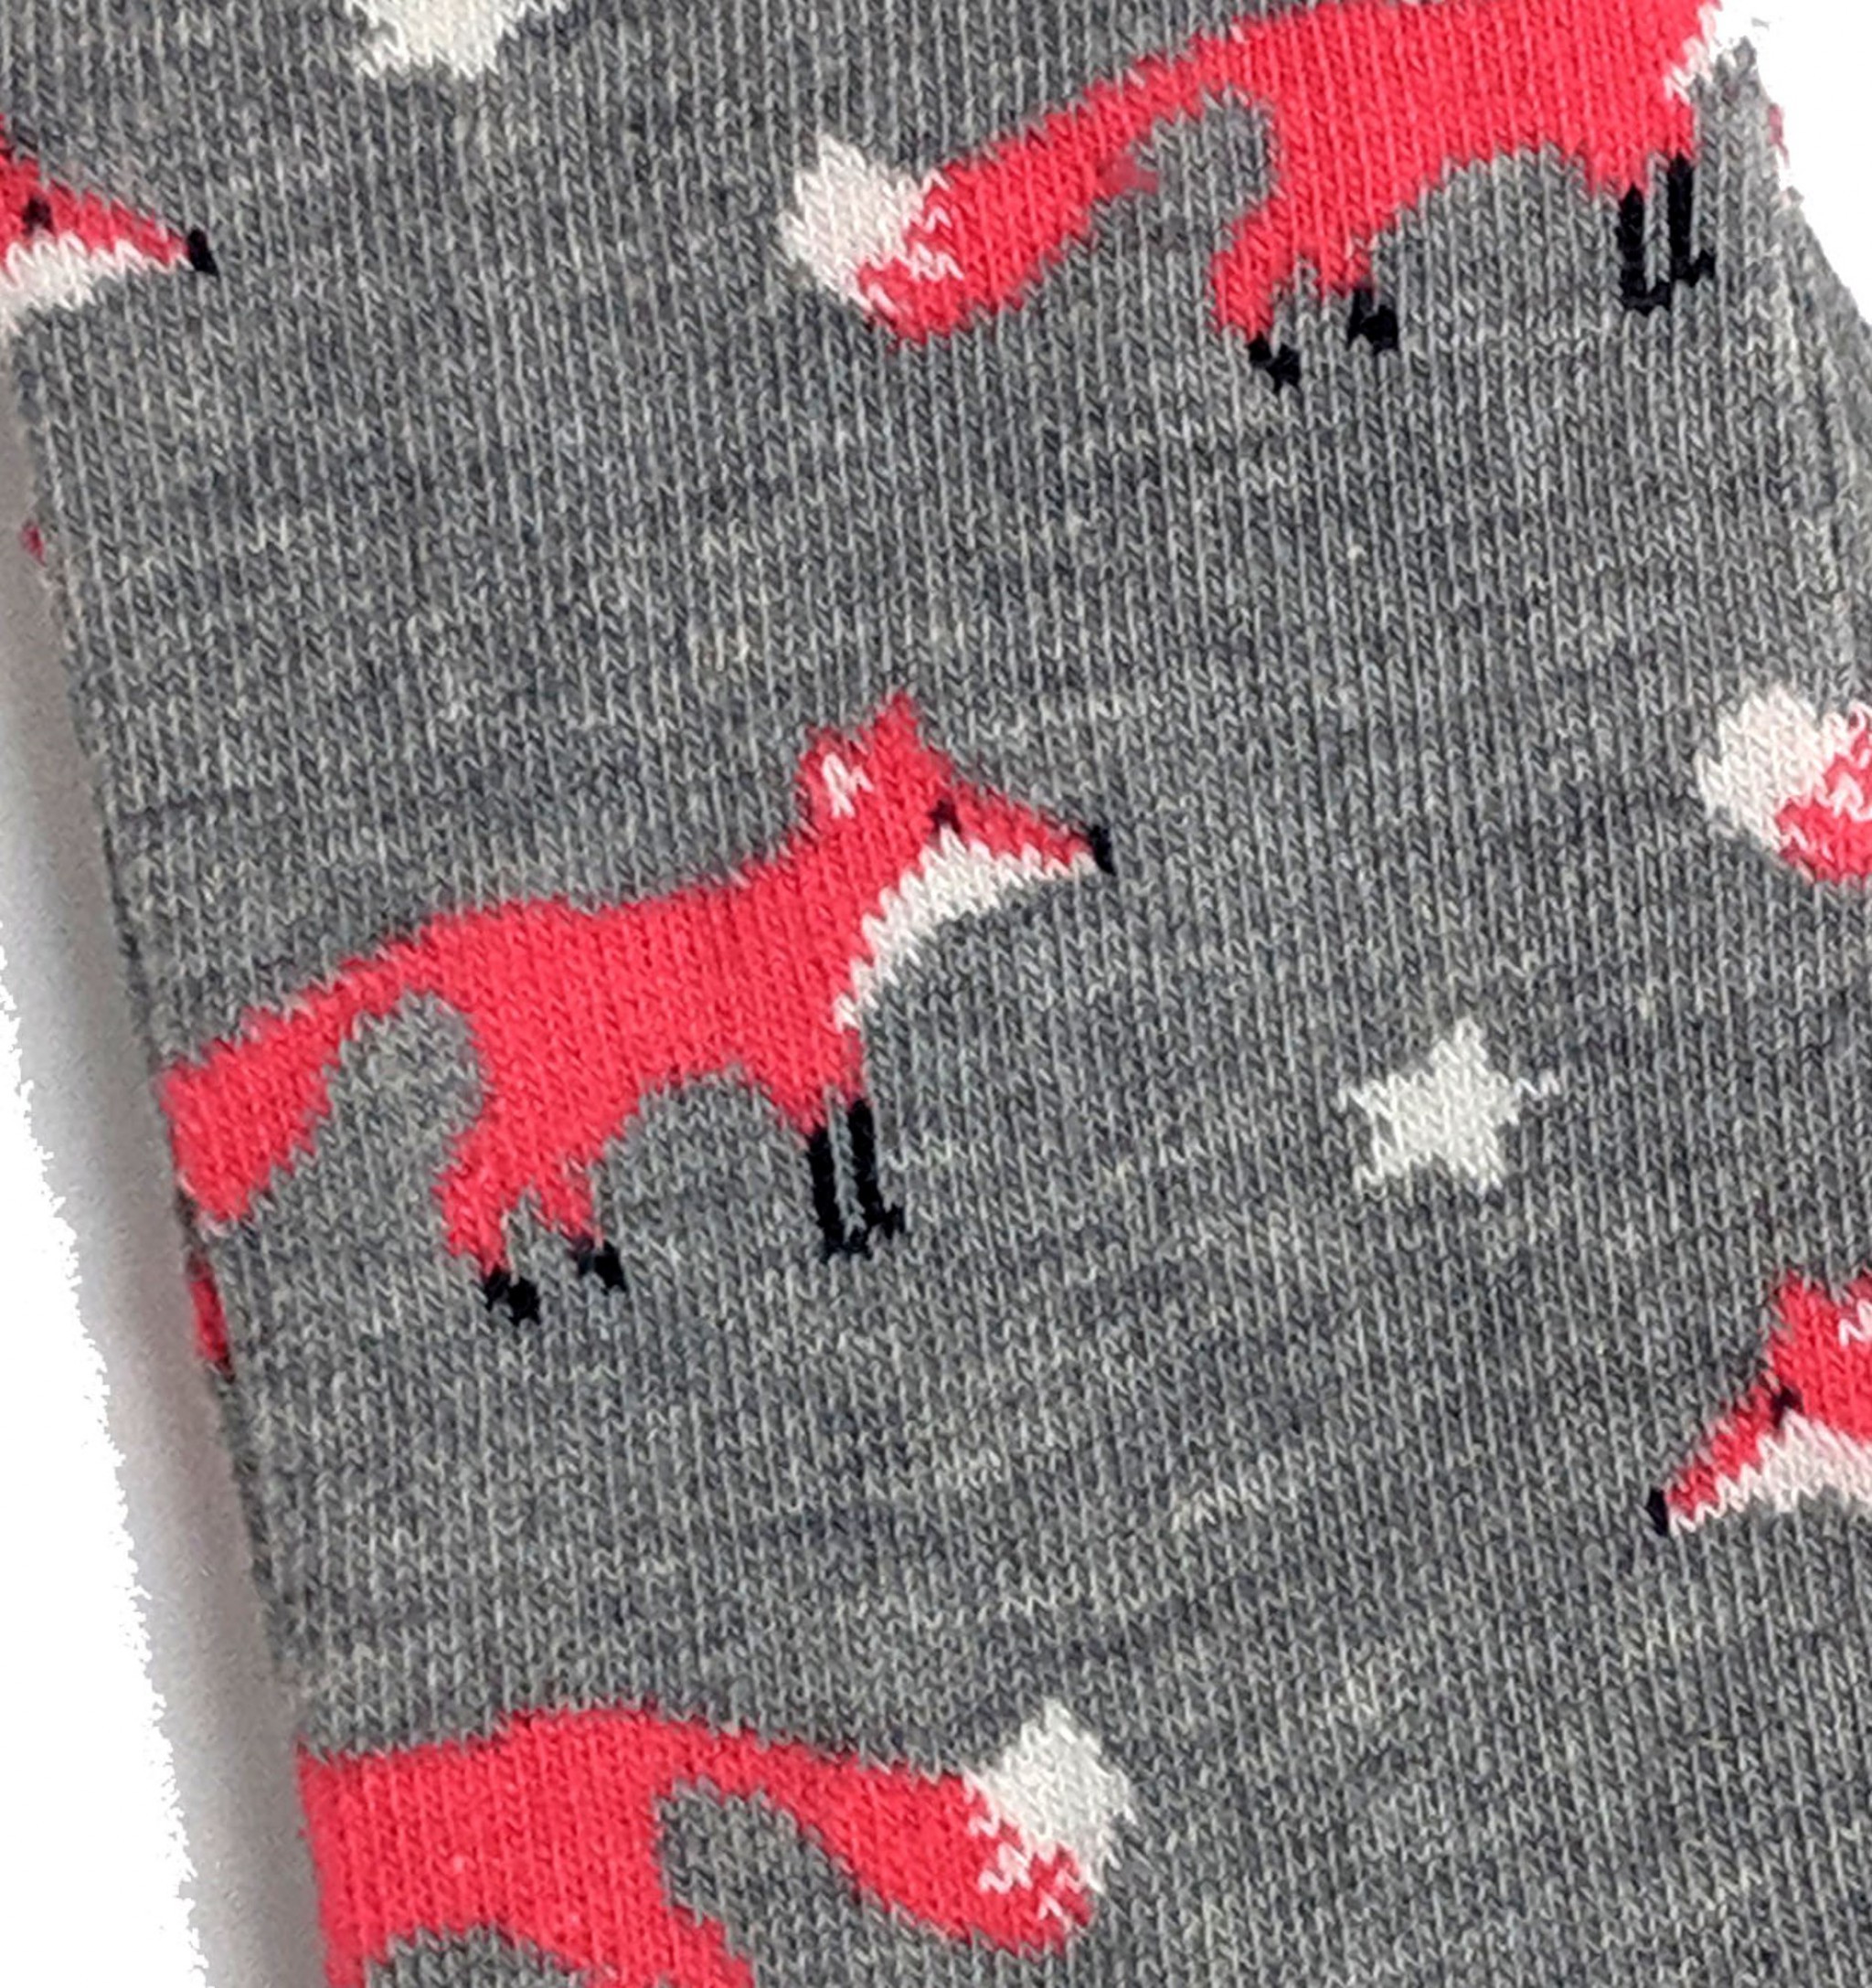 fox in socks first edition